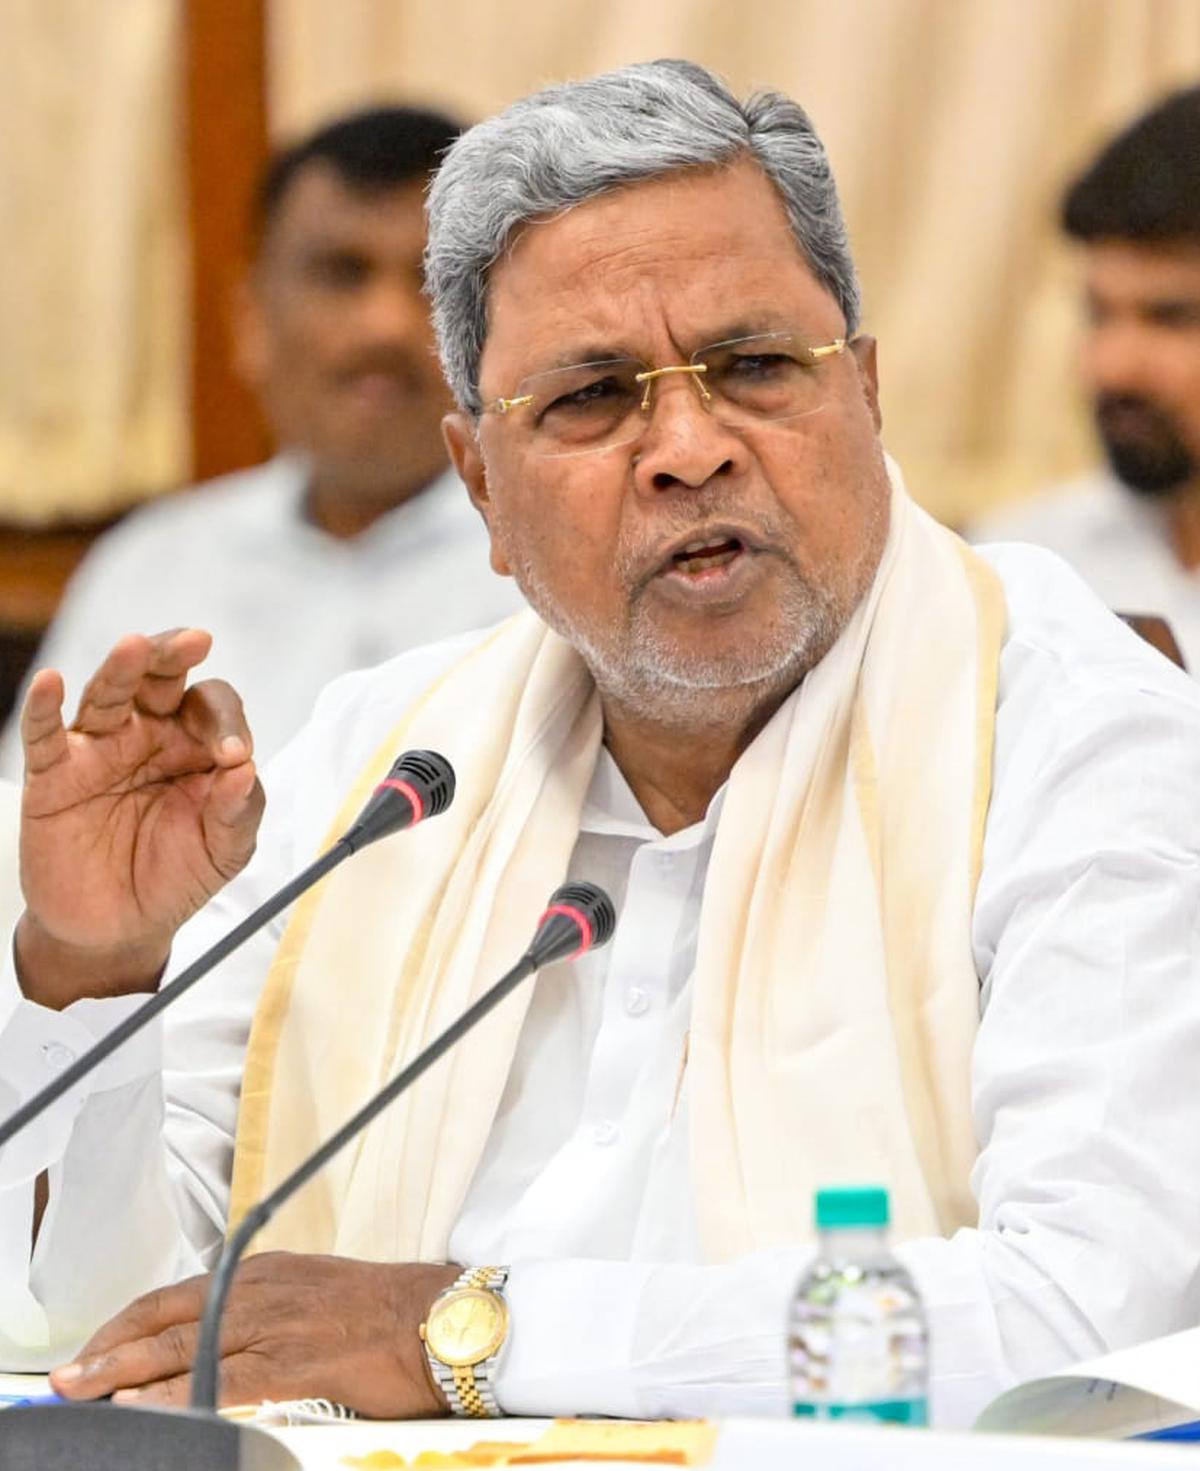 Karnataka Chief Minister urges PM to his statement of need for 'proper response' to Udayanidhi's remarks on Sanatana Dharma - The Hindu